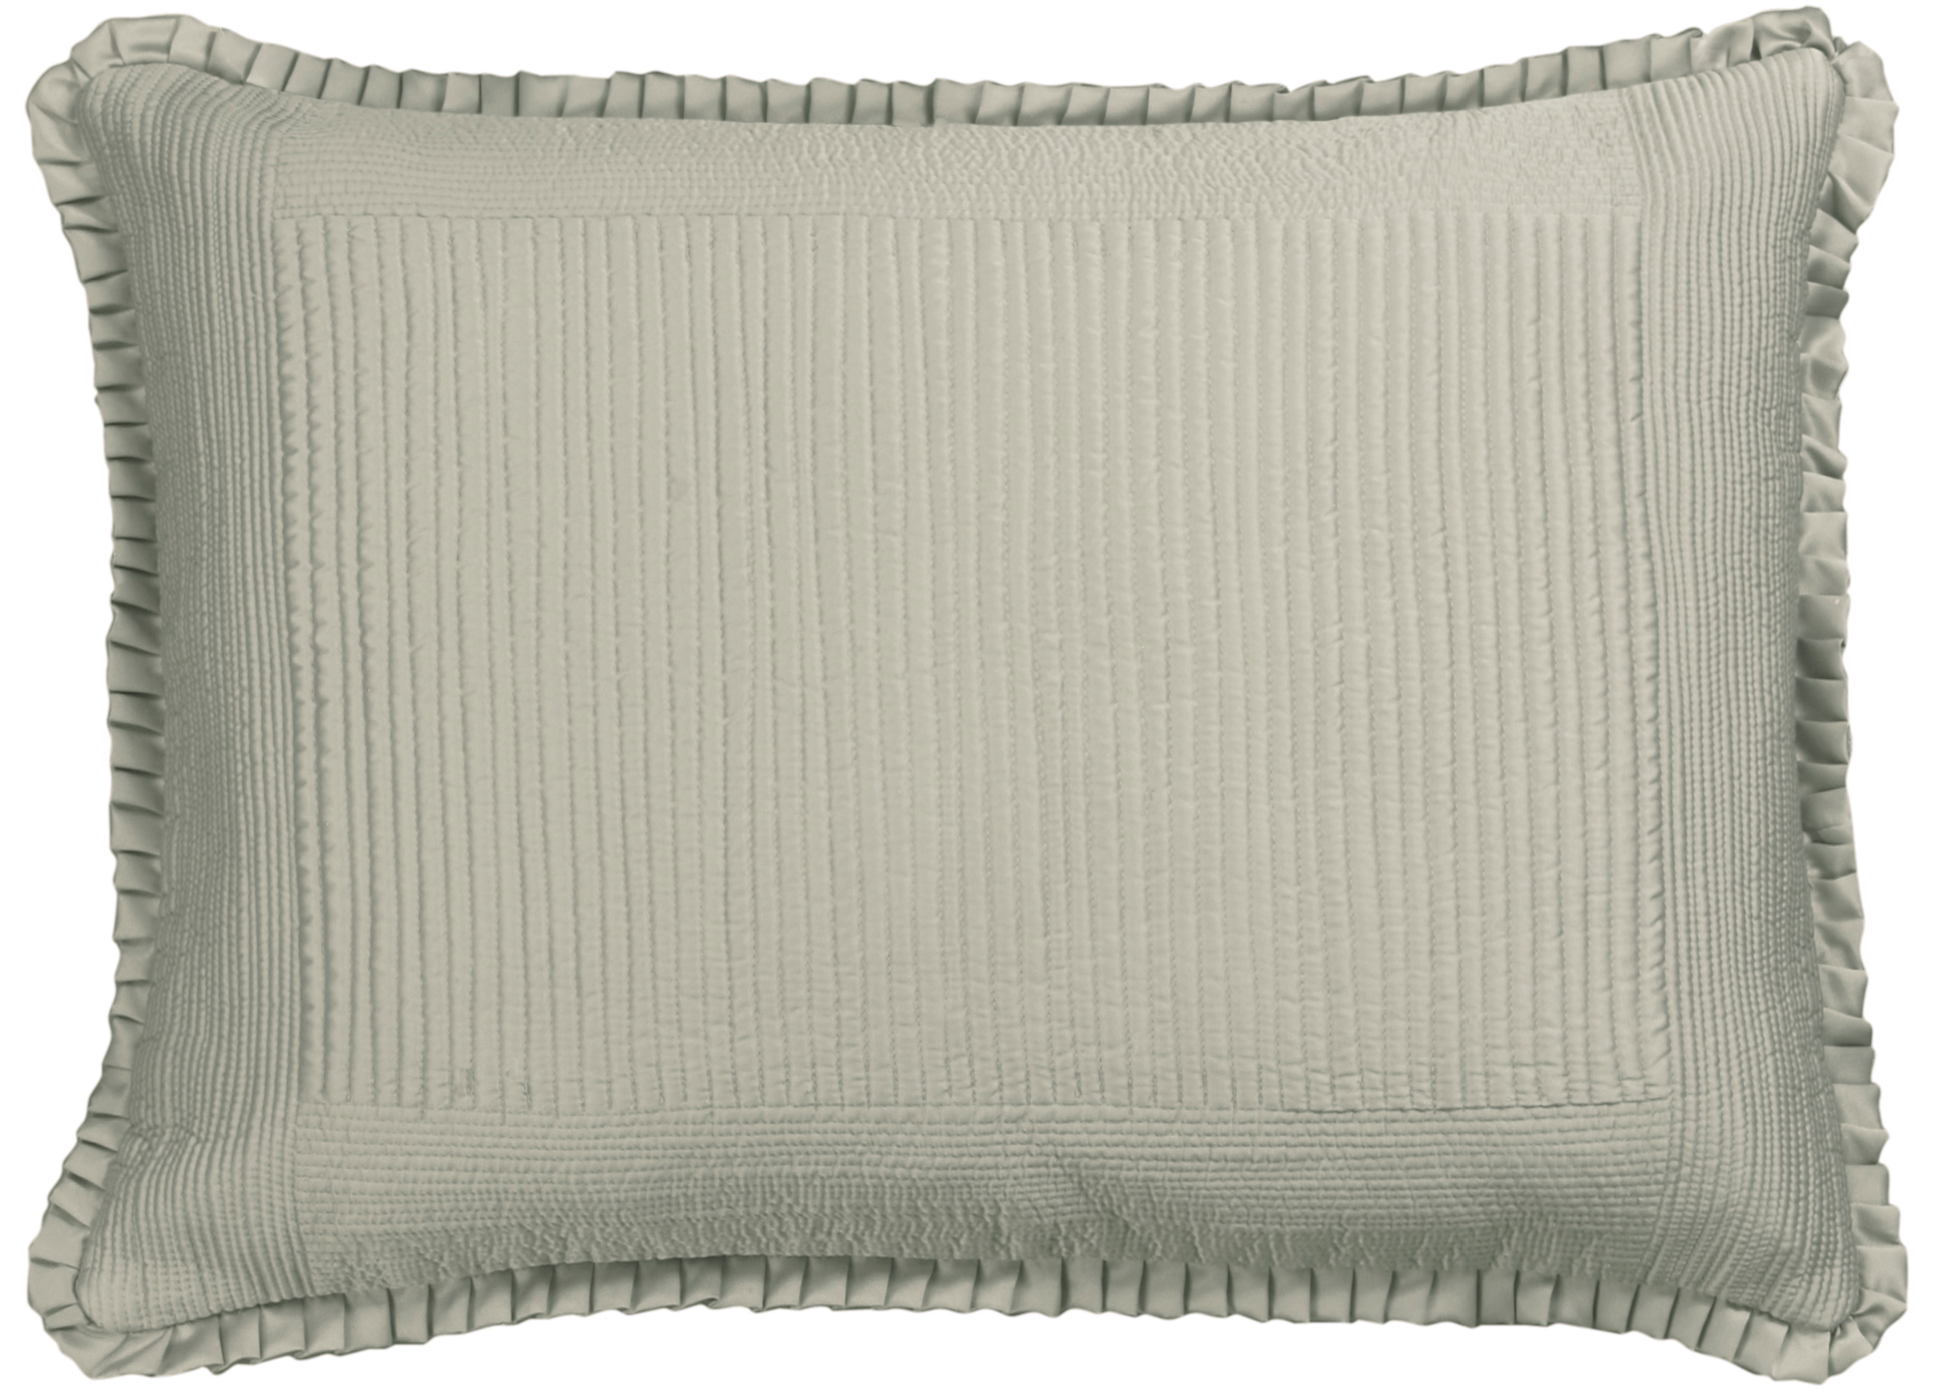 Lili Alessandra Battersea Taupe Standard Pillow